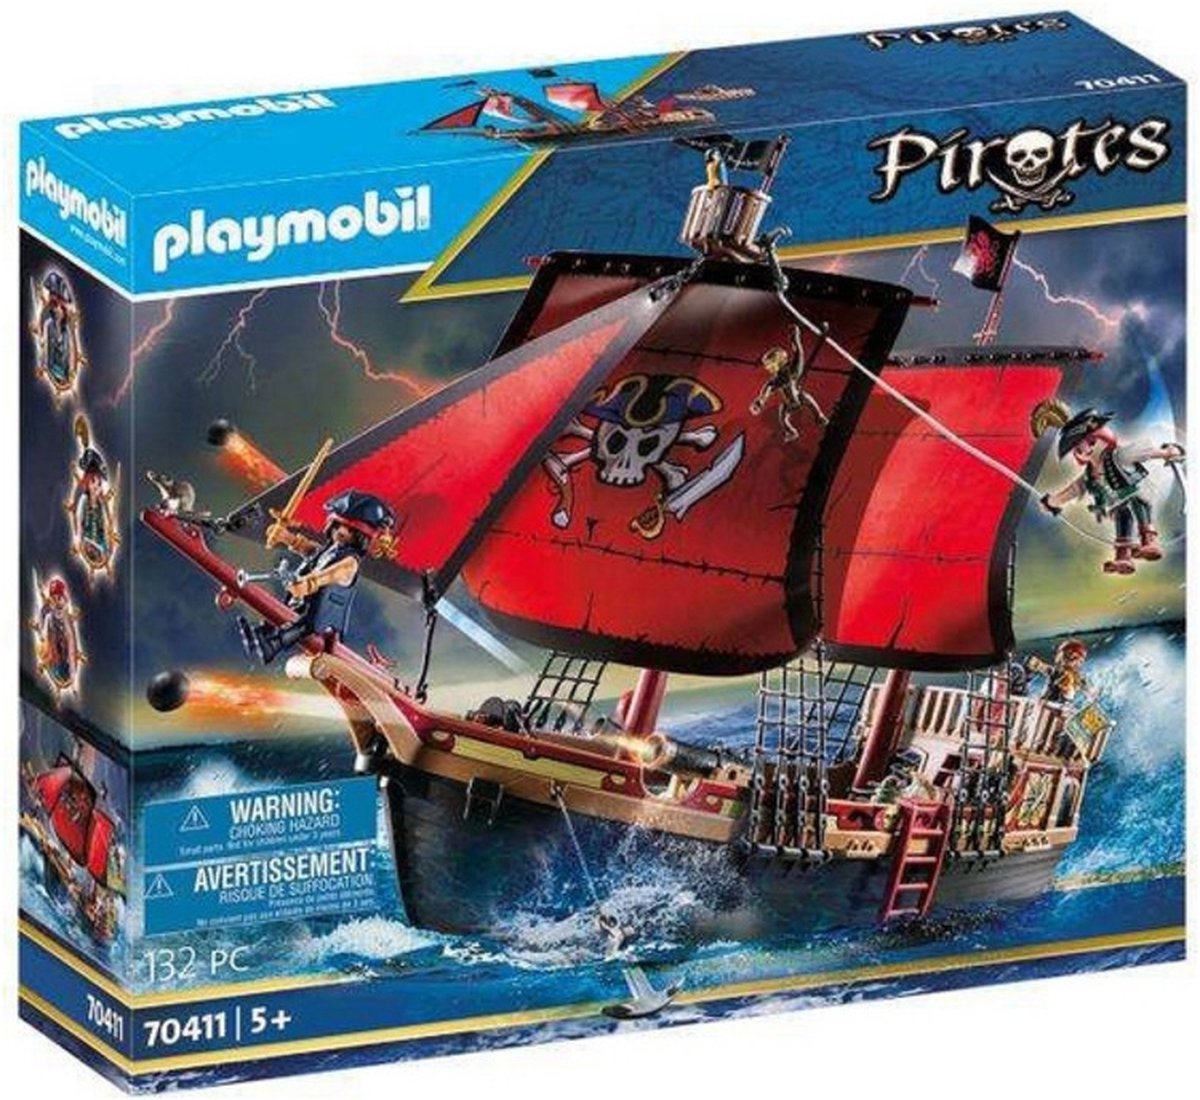 PLAYMOBIL Pirates Piratenschip - 70411